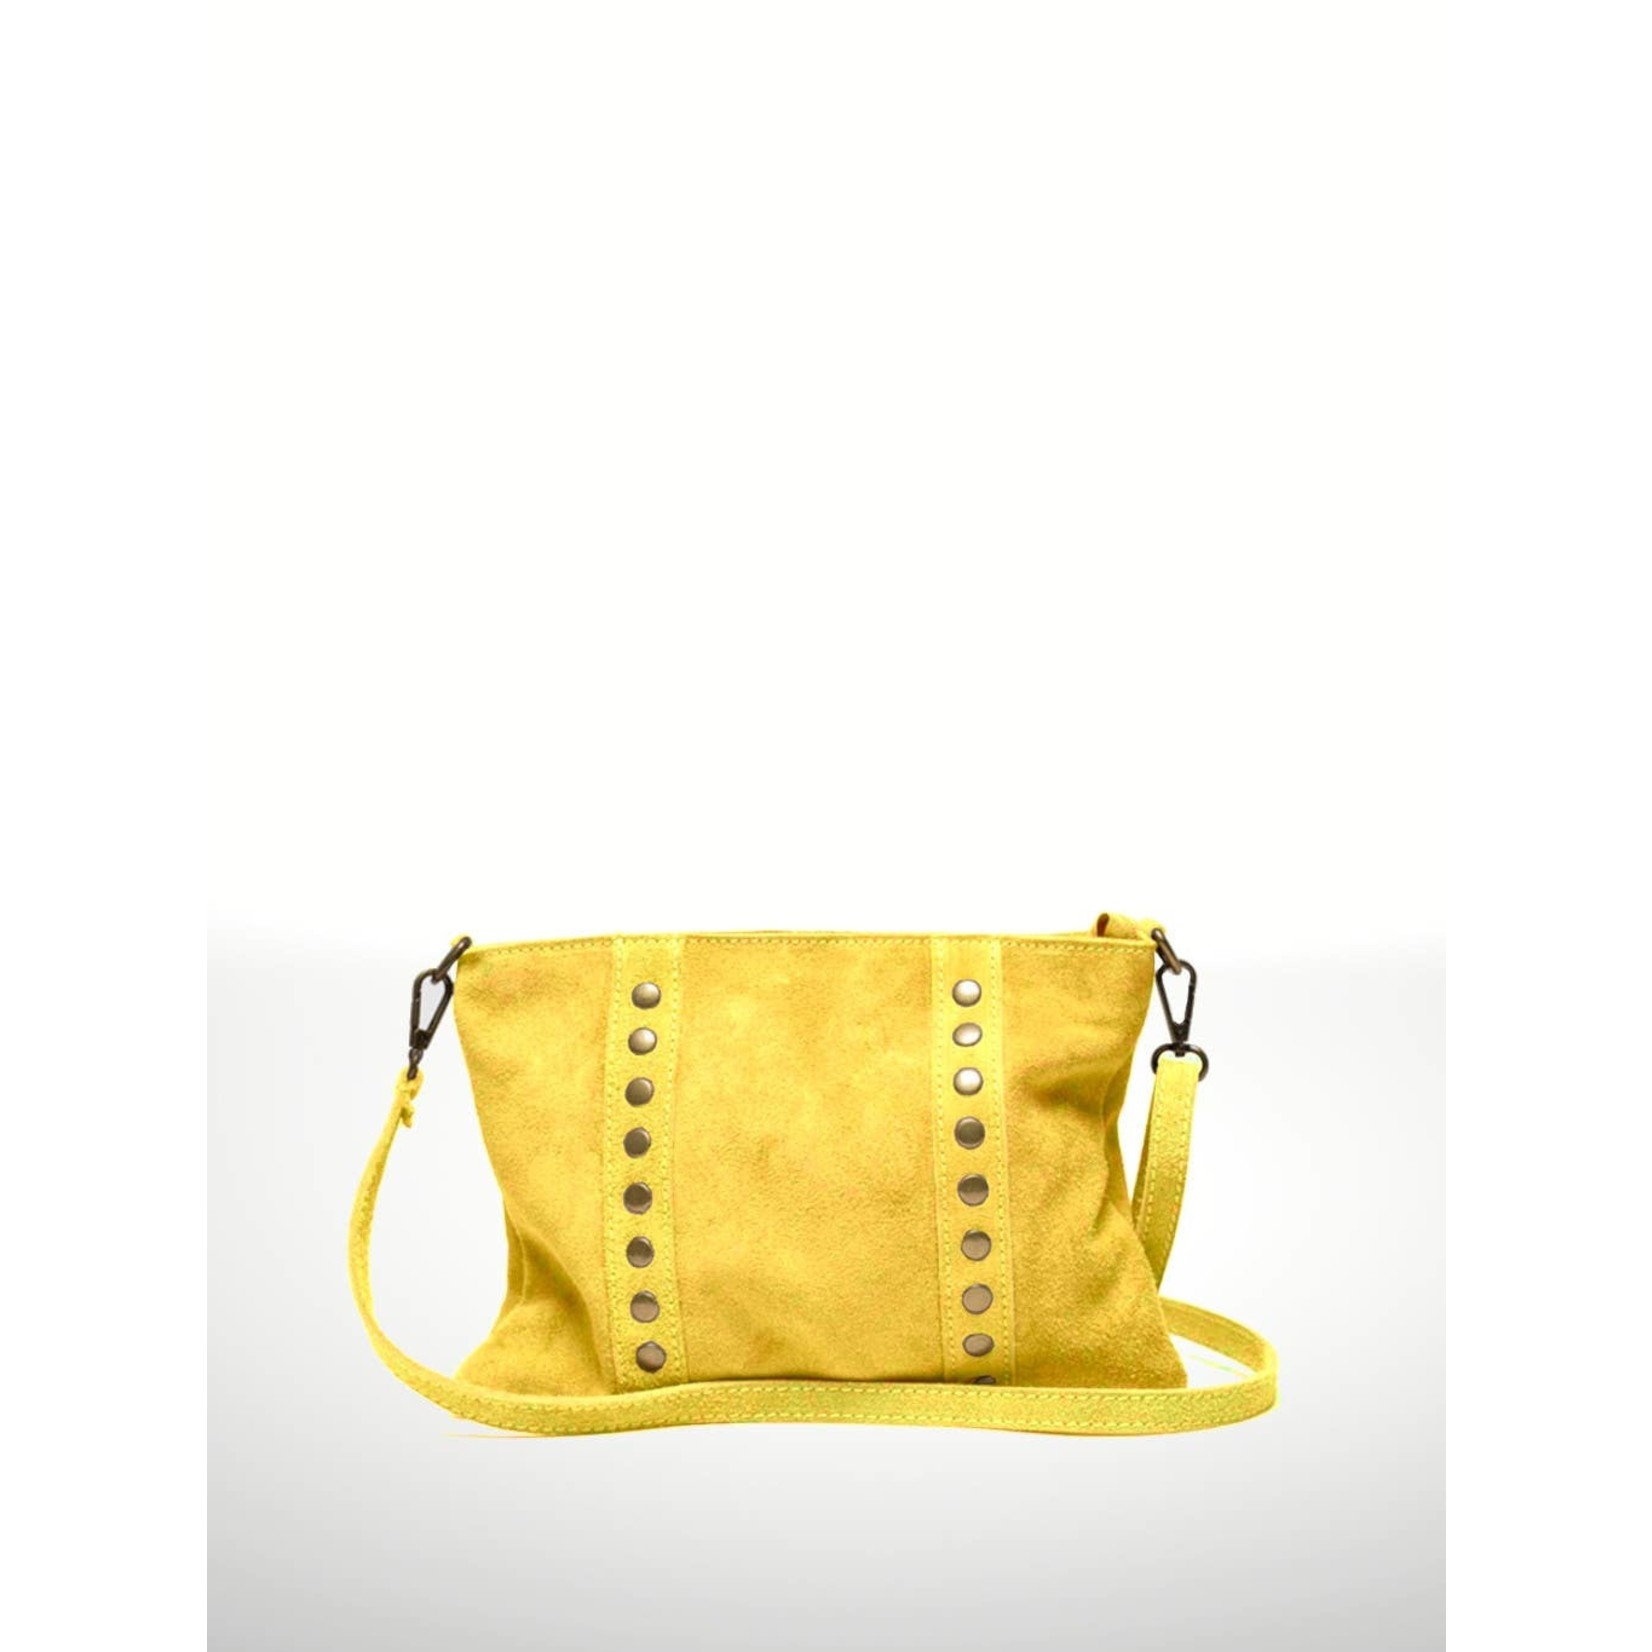 Italian’s Leather Celia Suede Leather Grommet Trim Handbag in Yellow